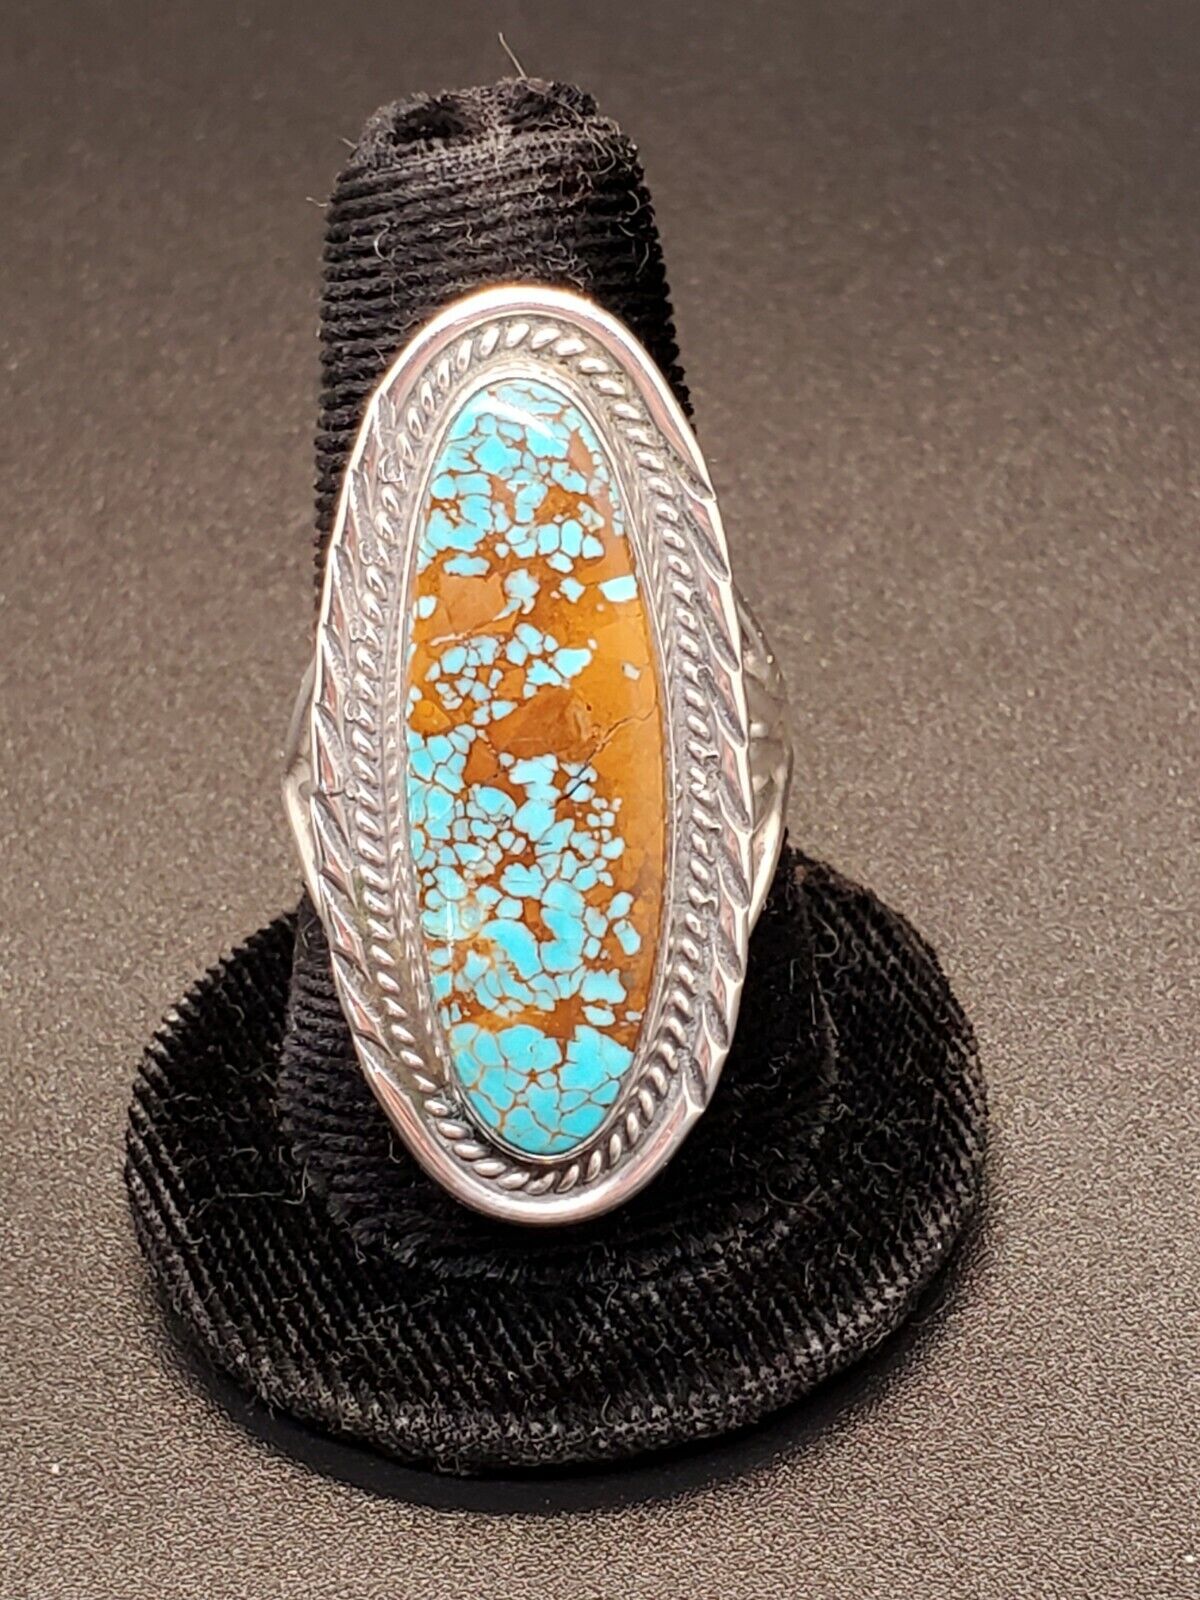 Navajo Kingman Spiderweb Turquoise Ring Size 9.5 Sterling Silver Vintage USA